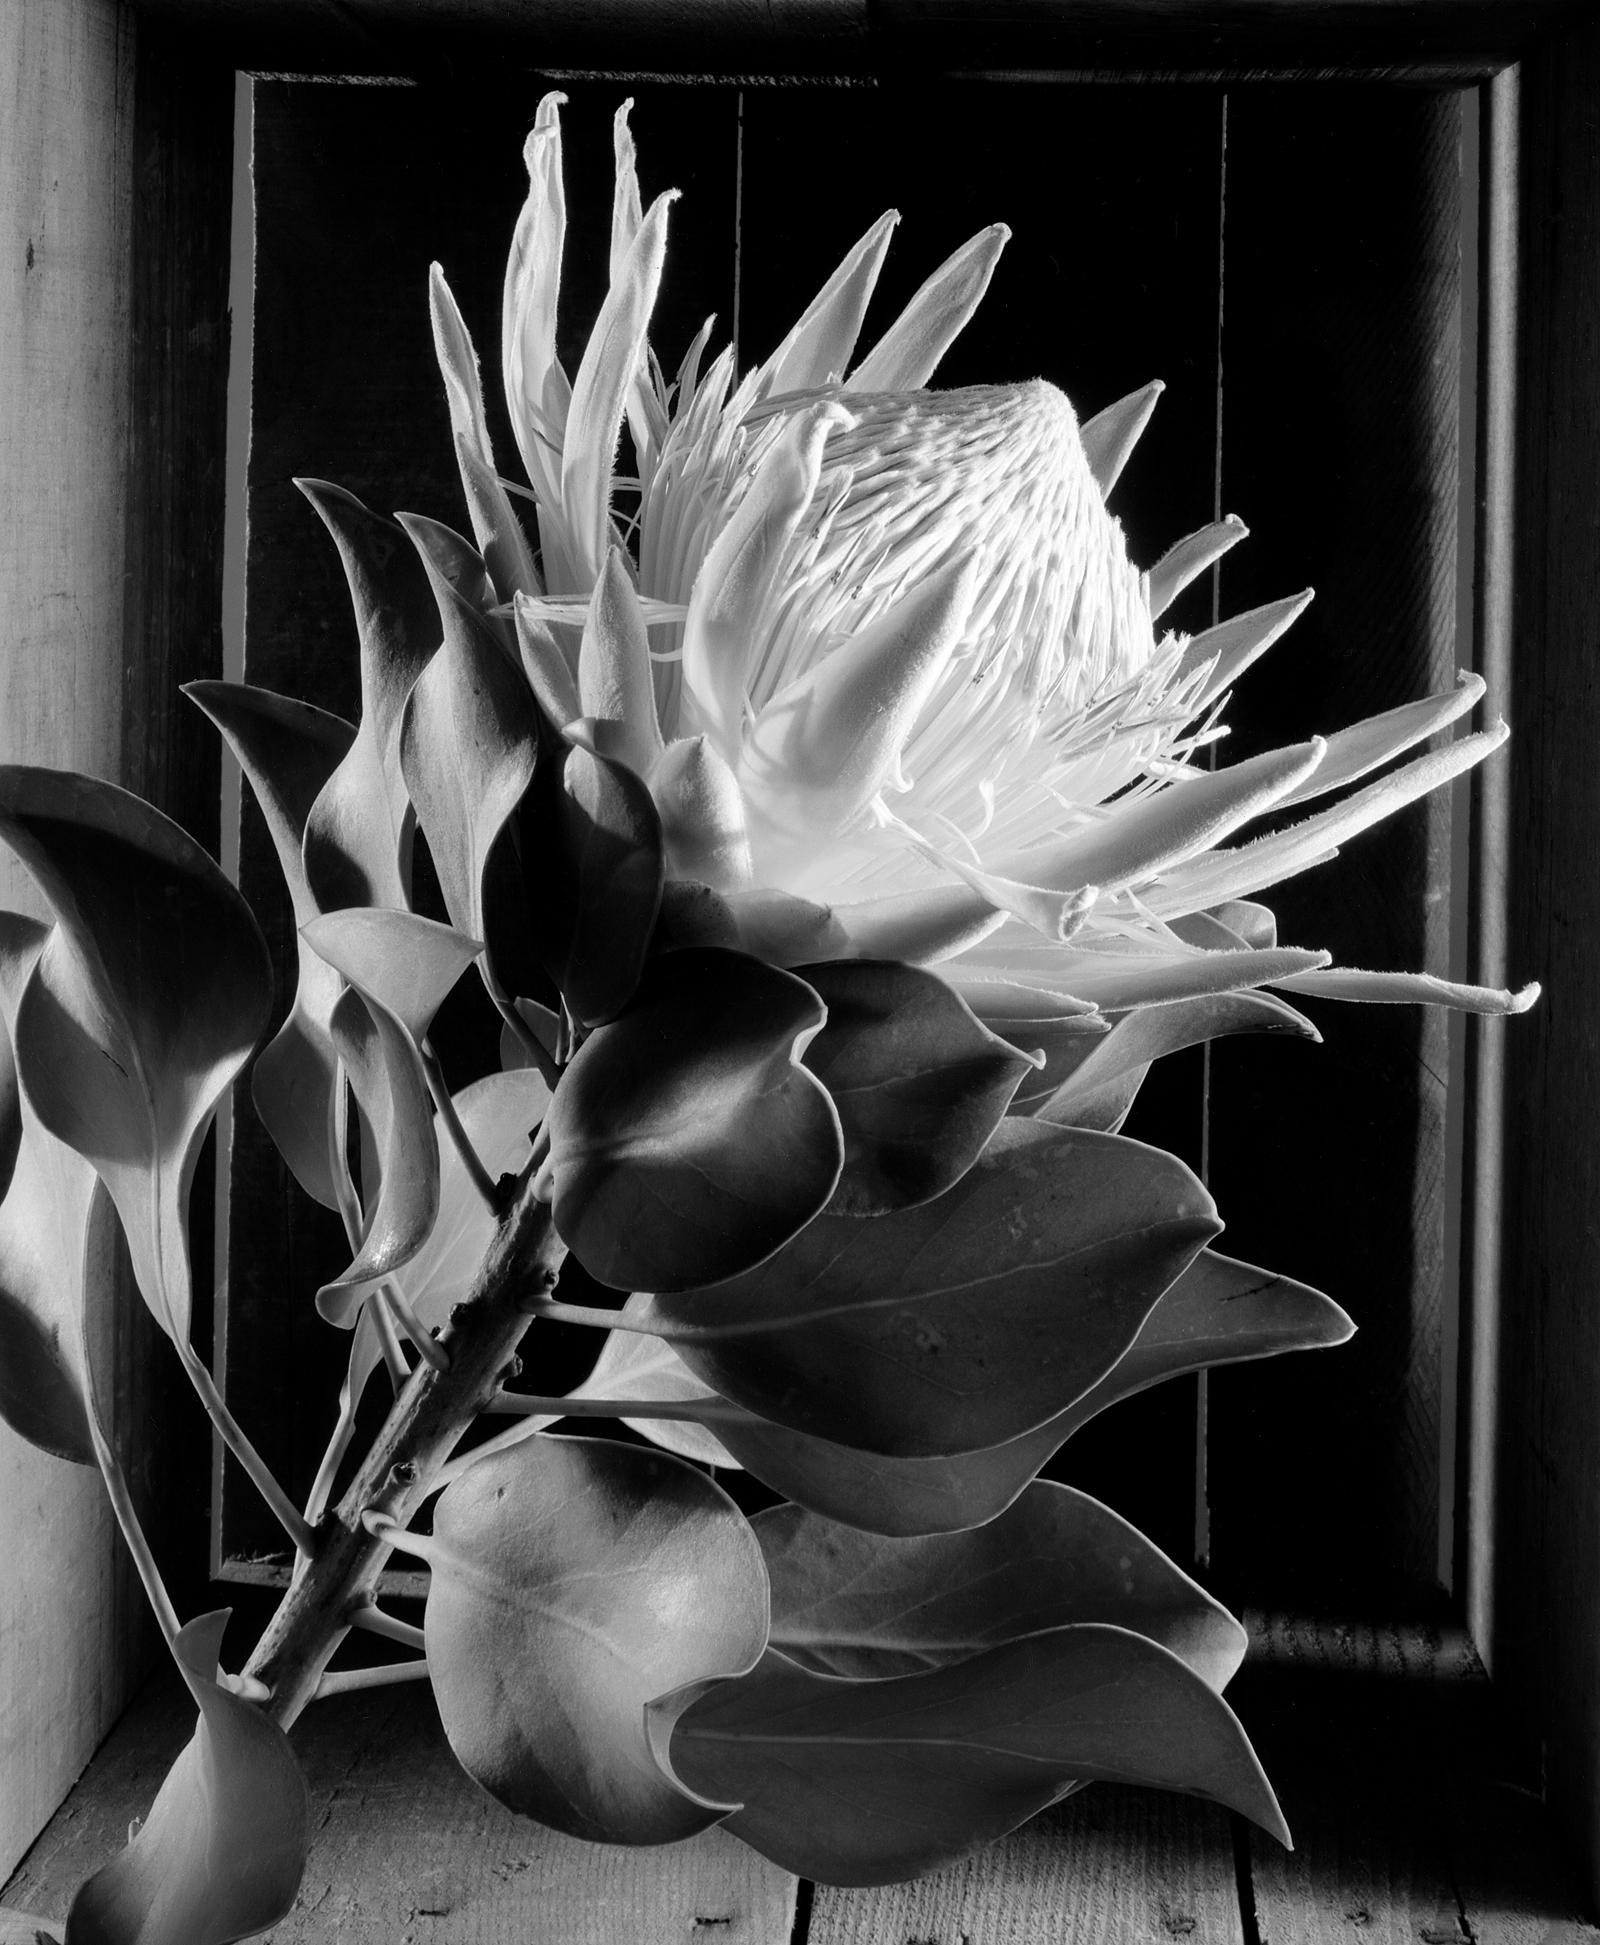 Howard Nathenson Still-Life Photograph - “King Protea”, digital black and white still life photograph